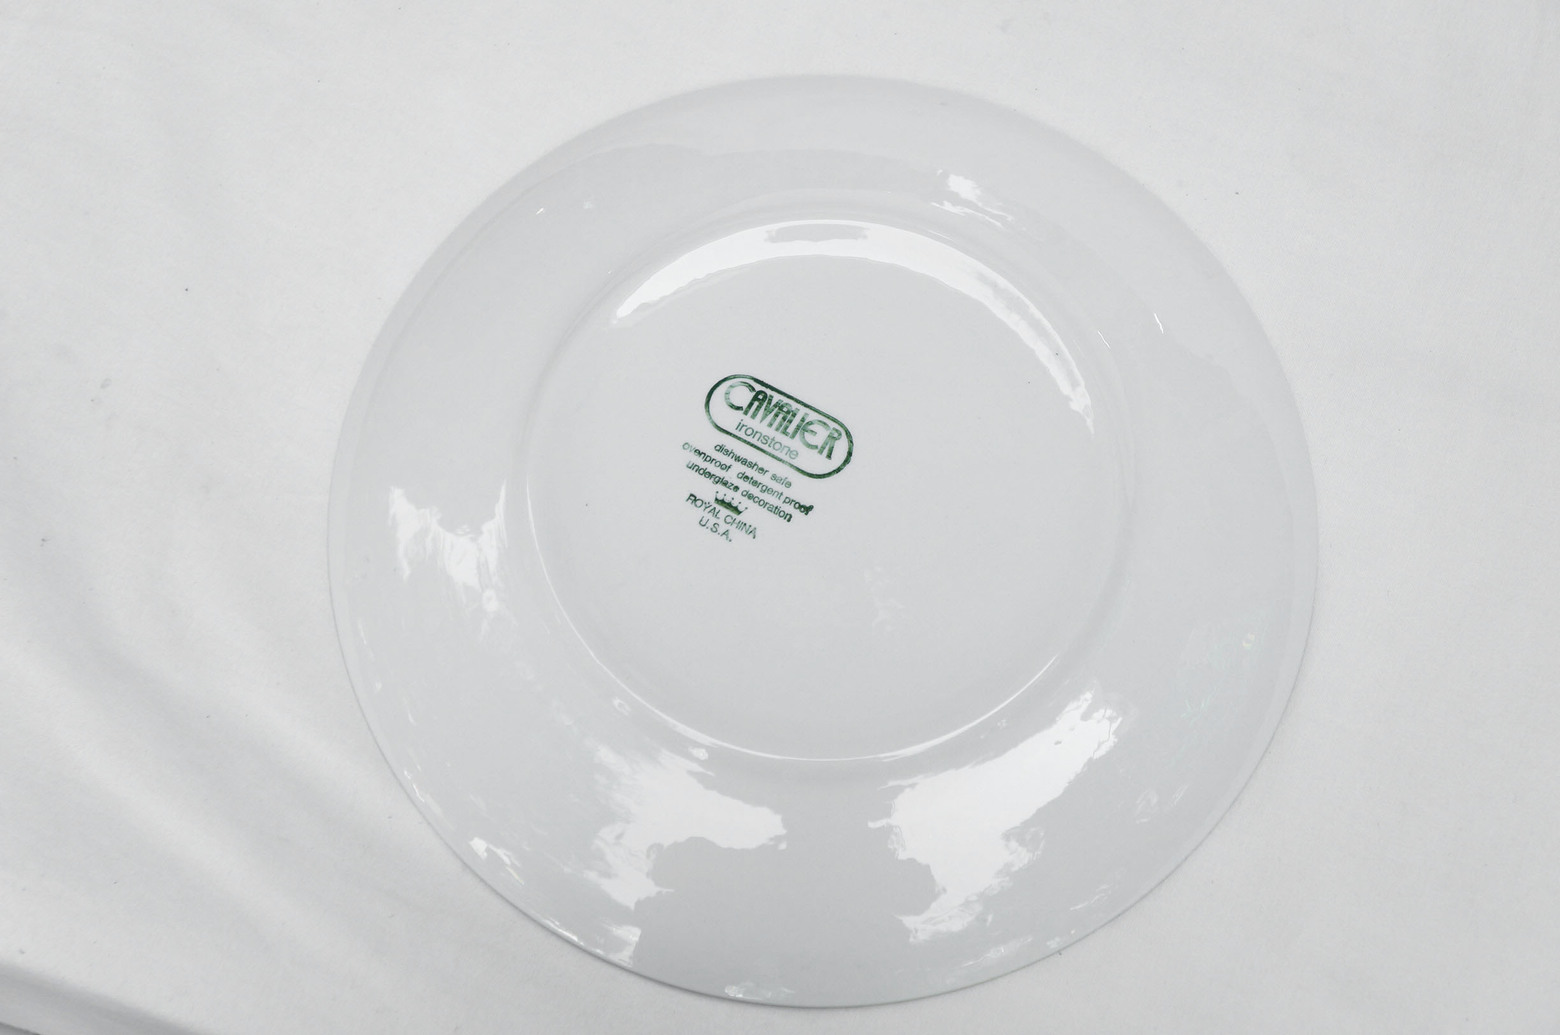 US Vintage Royal China Damsel Dinner Plate/アメリカ ヴィンテージ ロイヤルチャイナ ダムセル ディナープレート 食器 レトロ 3